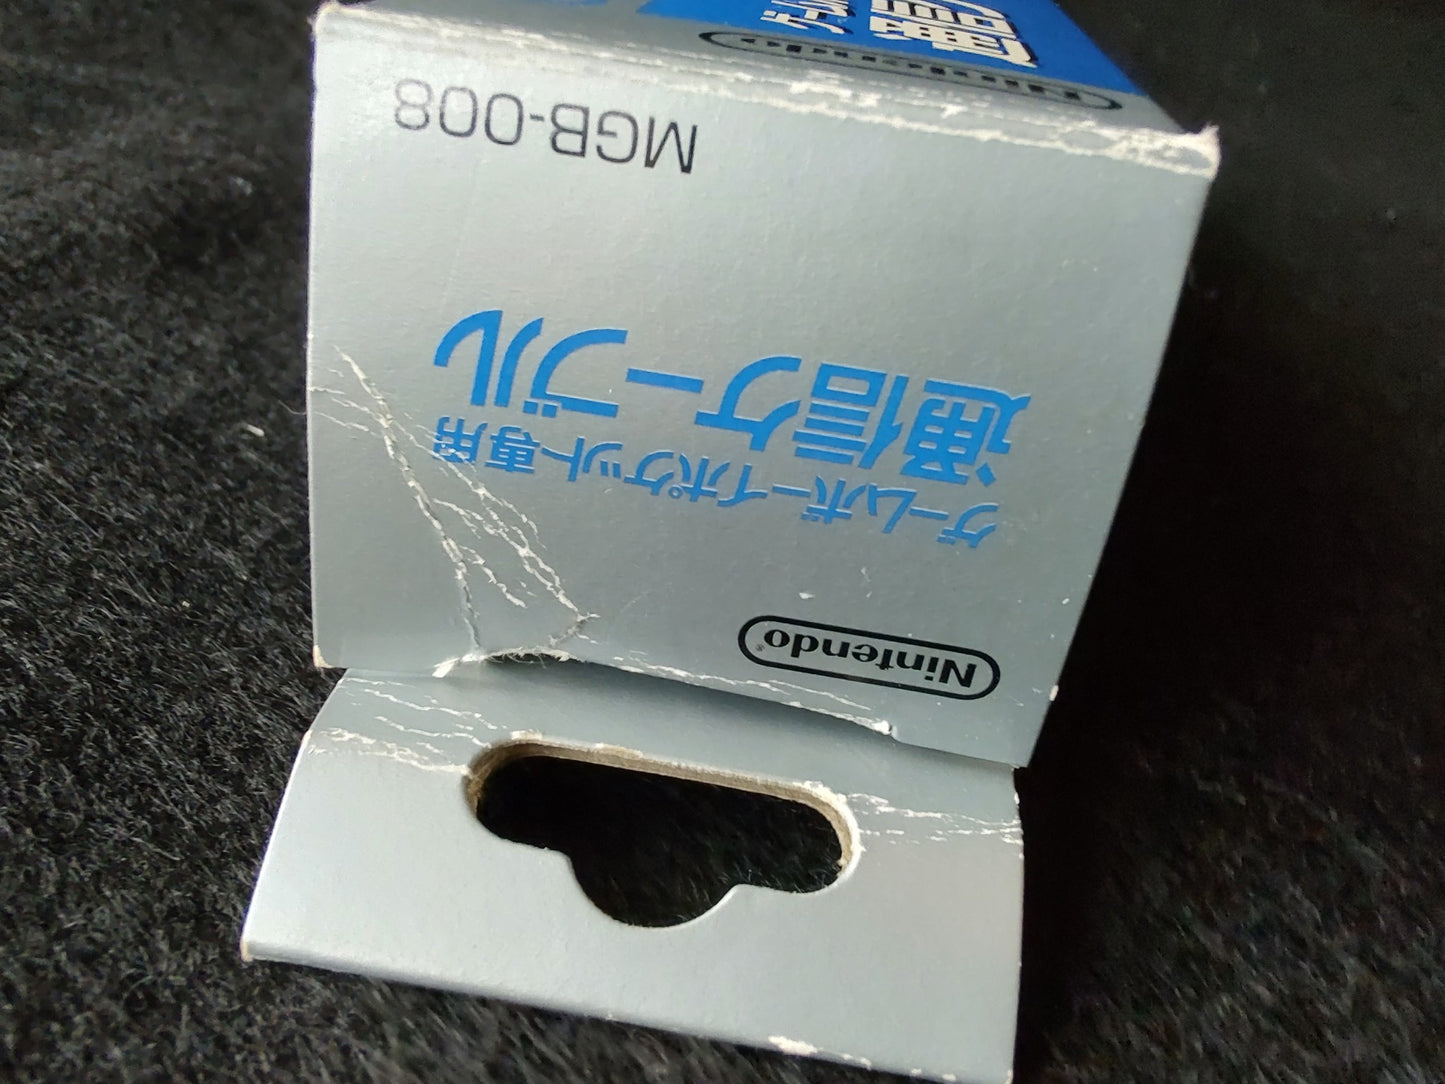 Nintendo official Gameboy Pocket Link Cable MGB-008 w/Box set-f0602-